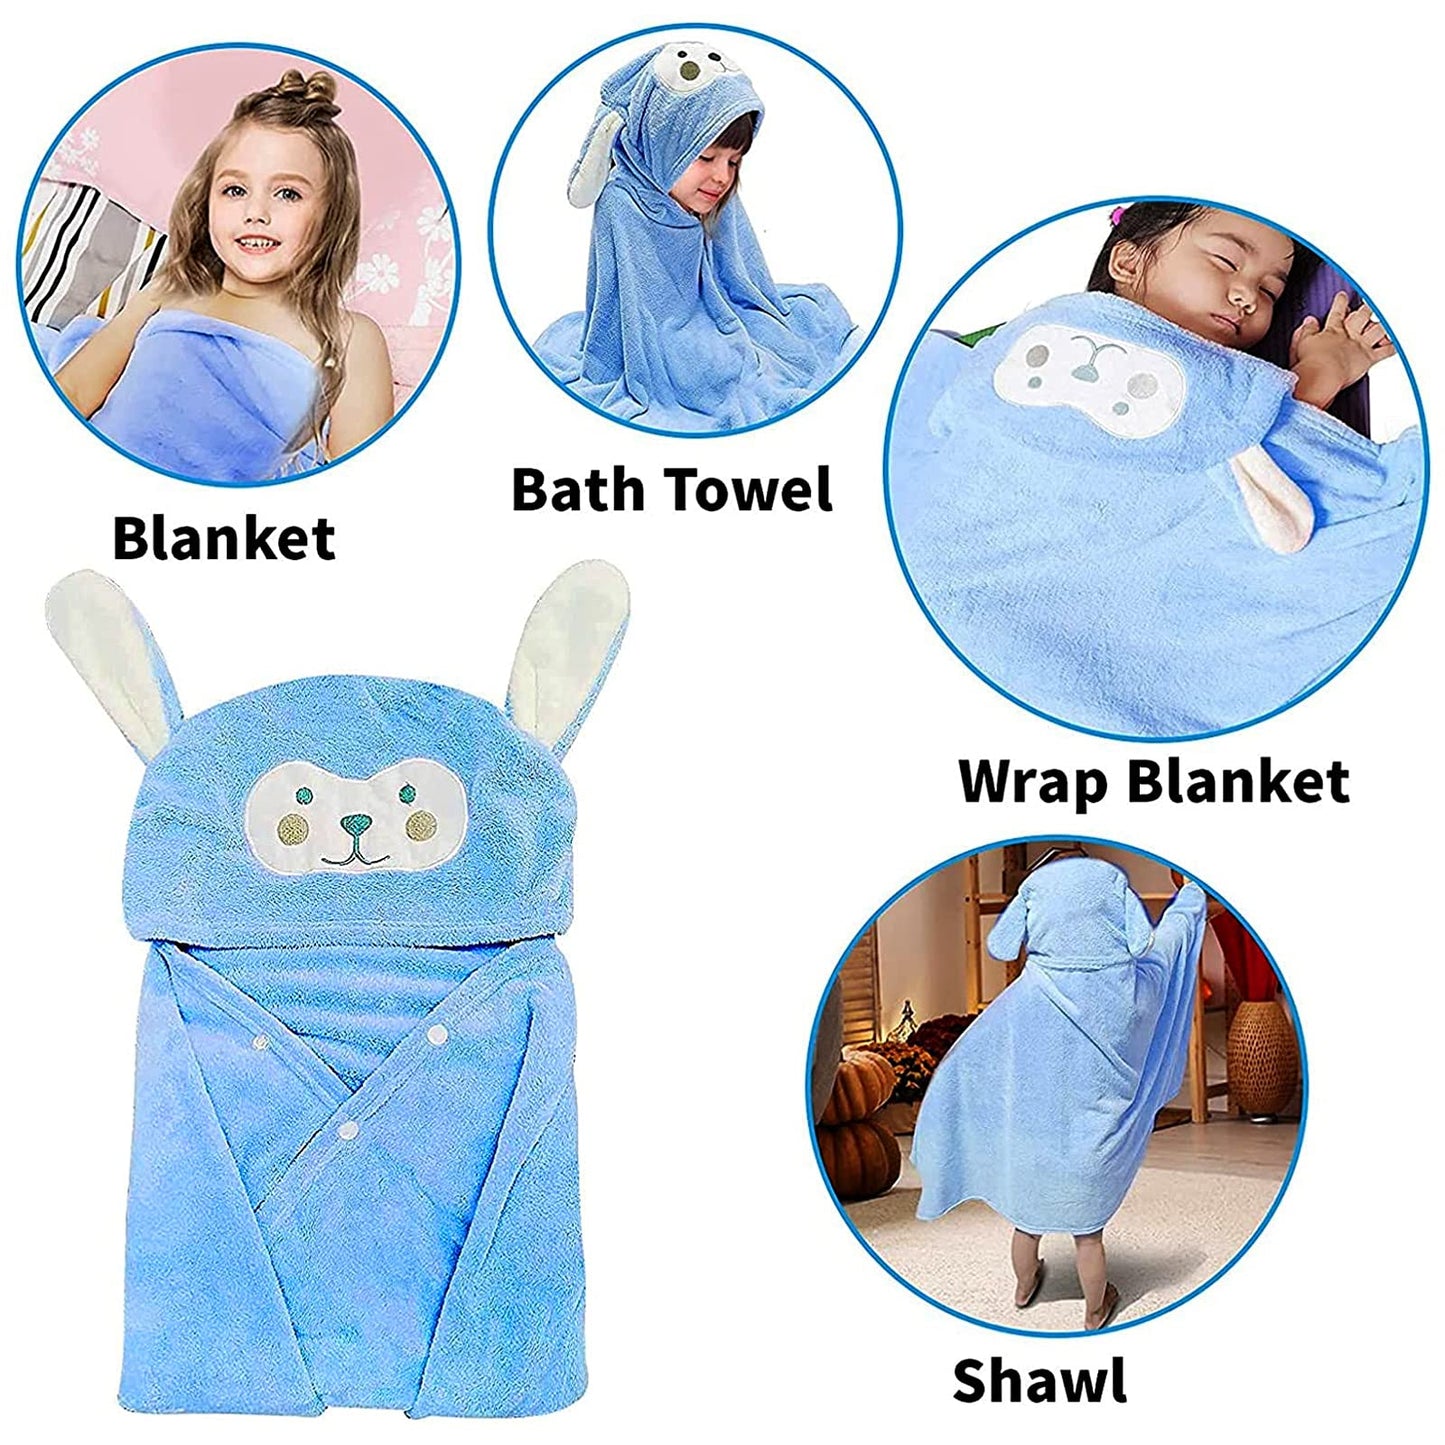 Visen Premium Hooded Towel for Kids,-28×55 INCH Large Size Kids Bath Towel,Ultra Soft Hooded Towel Wrap for Boys Girls